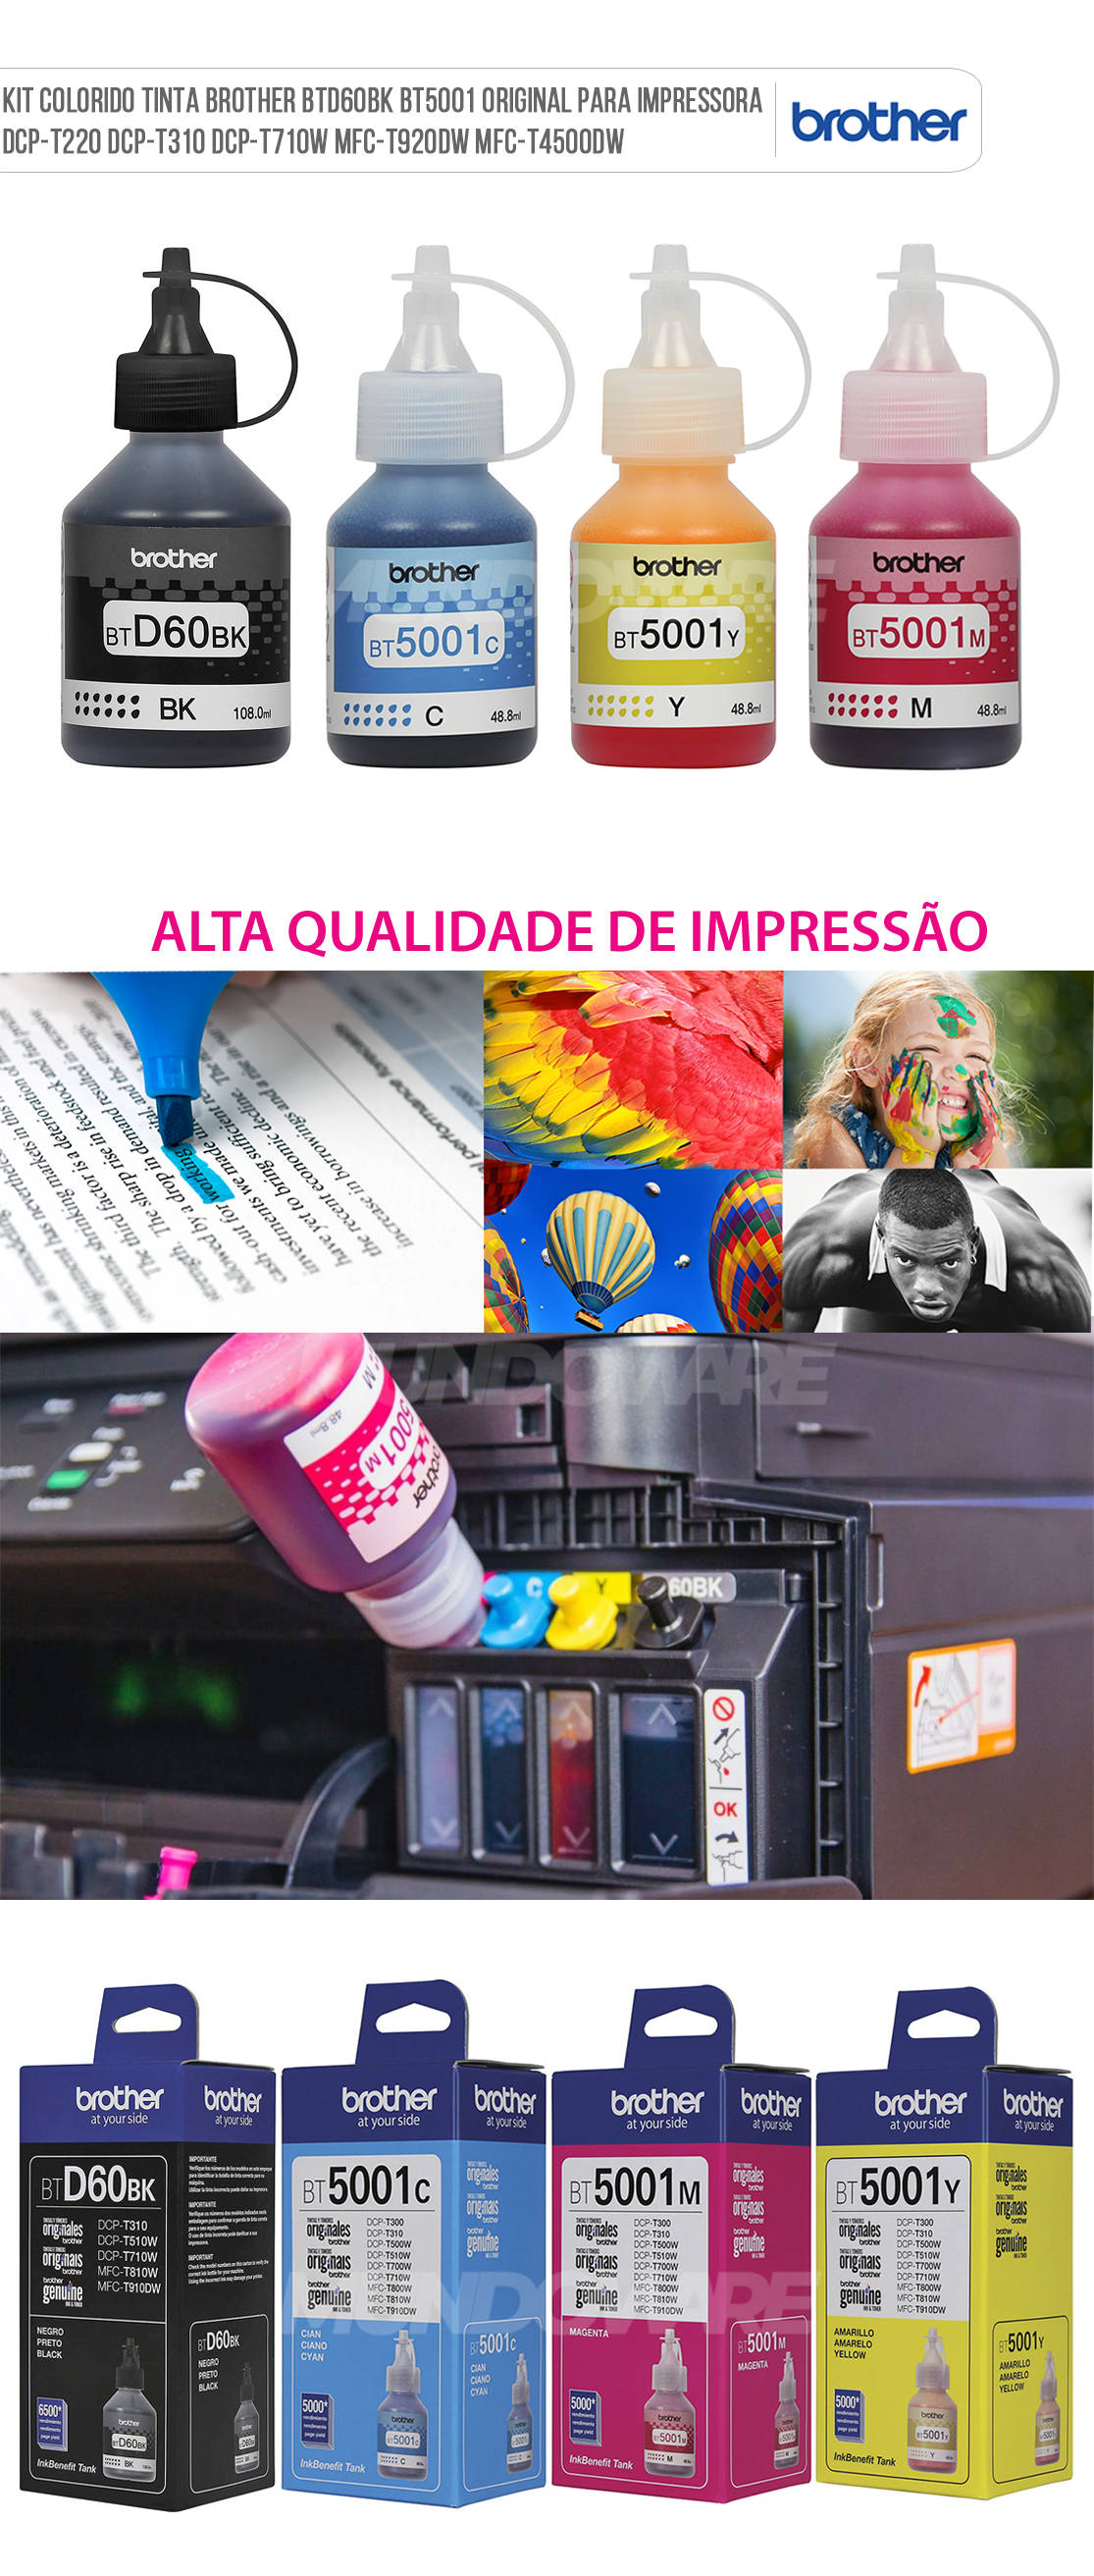 Kit Colorido Tinta Brother BT-6001 BT-5001 Original para Impressora DCP-T300 DCP-T500W DCP-T700W MFC-T800W